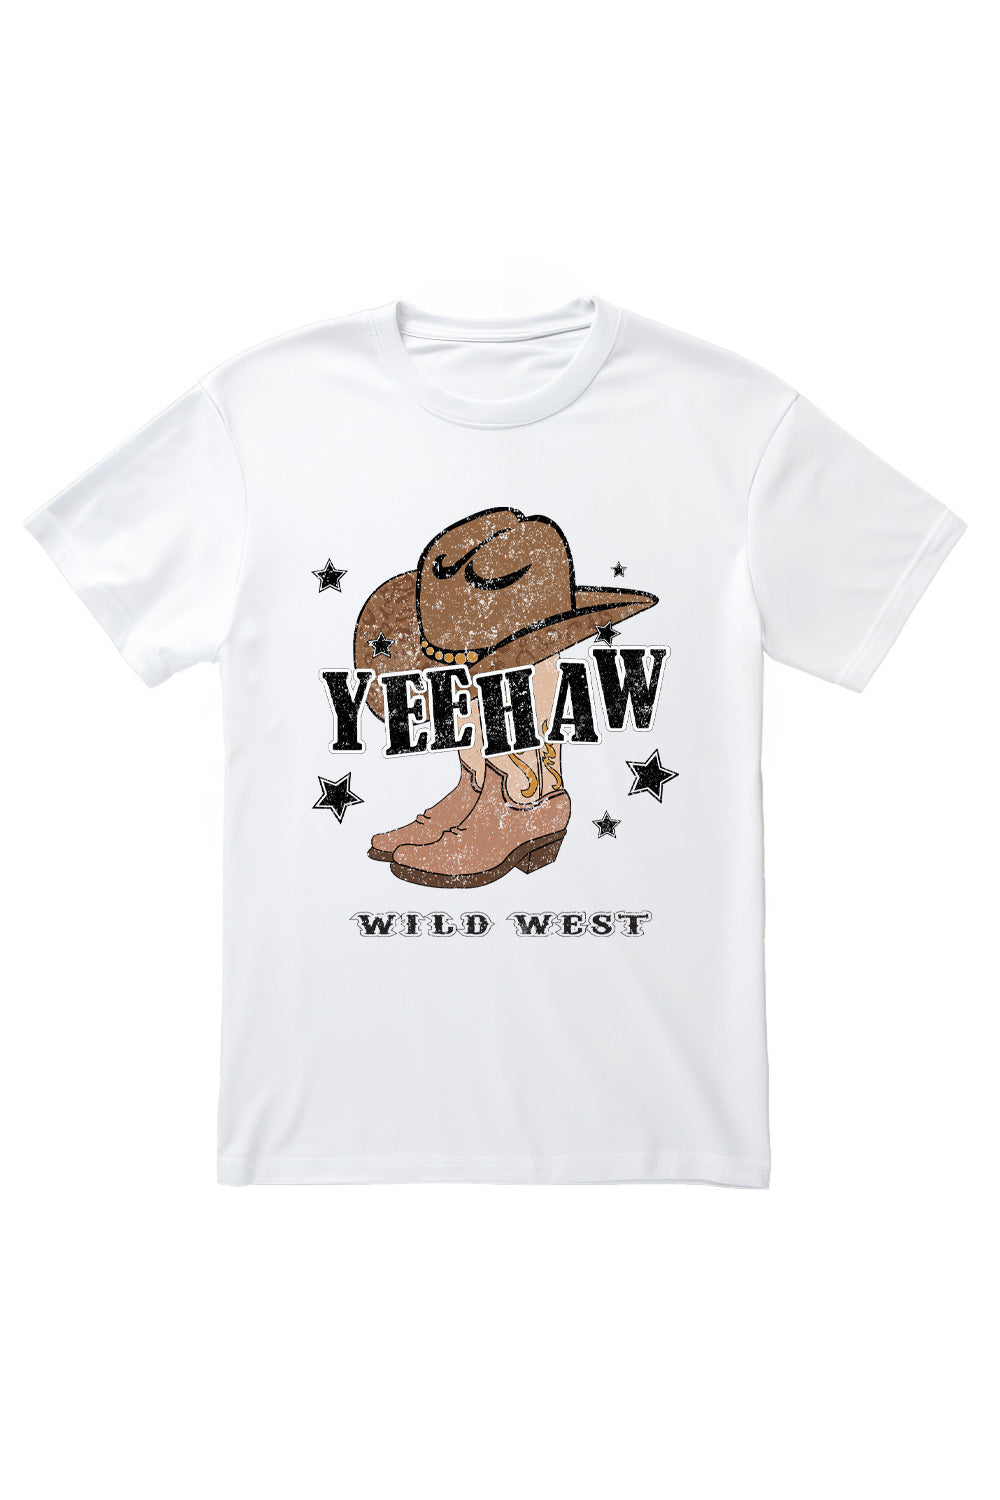 Yeehaw Wild West T-Shirt